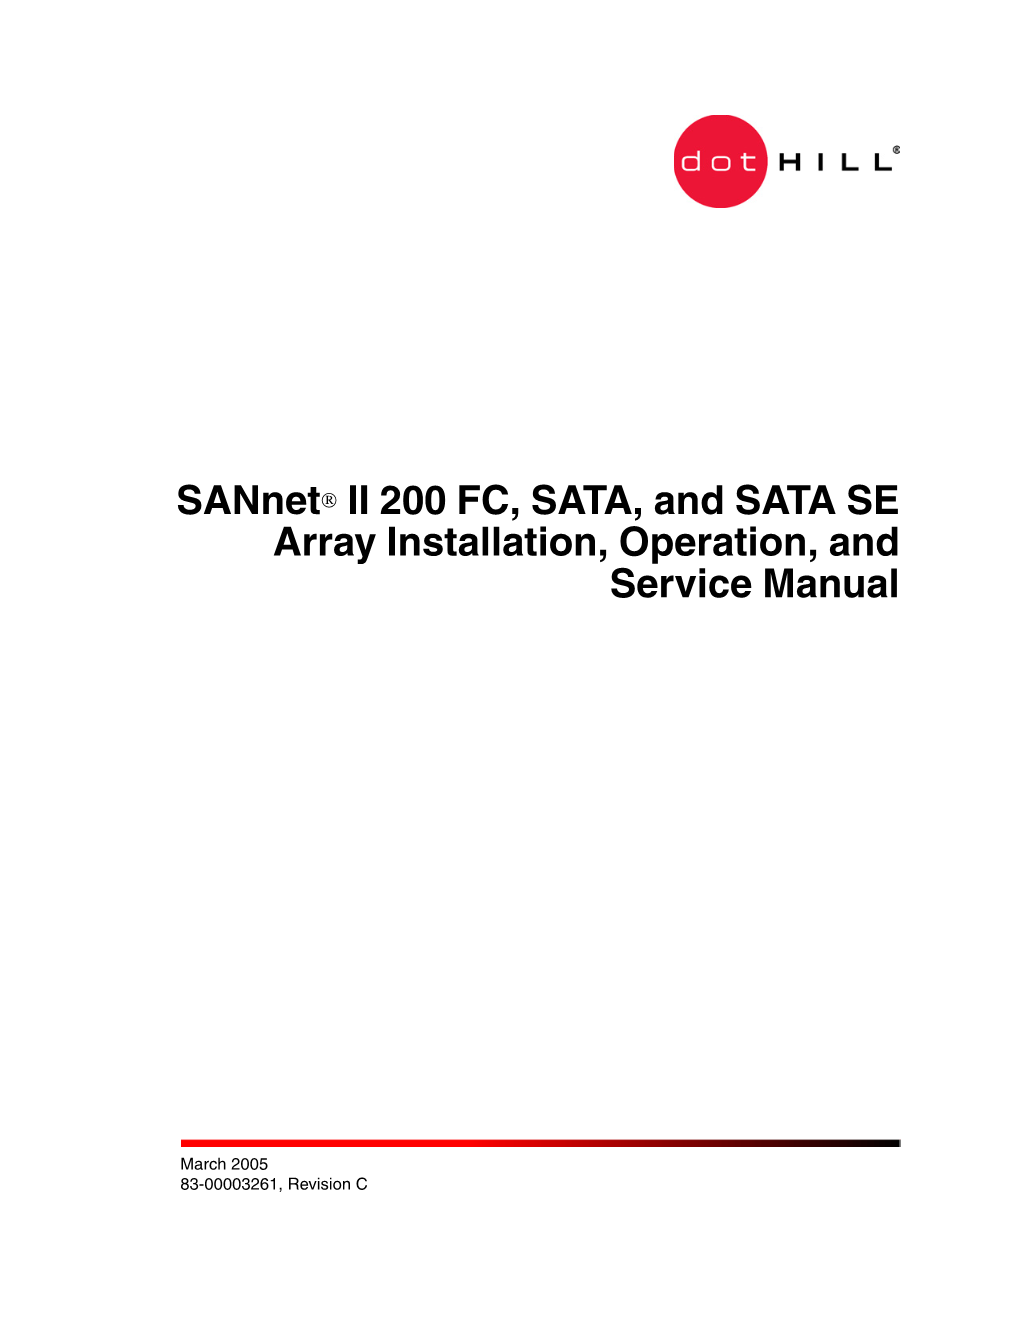 Sannet® II 200 FC, SATA, and SATA SE Array Installation, Operation